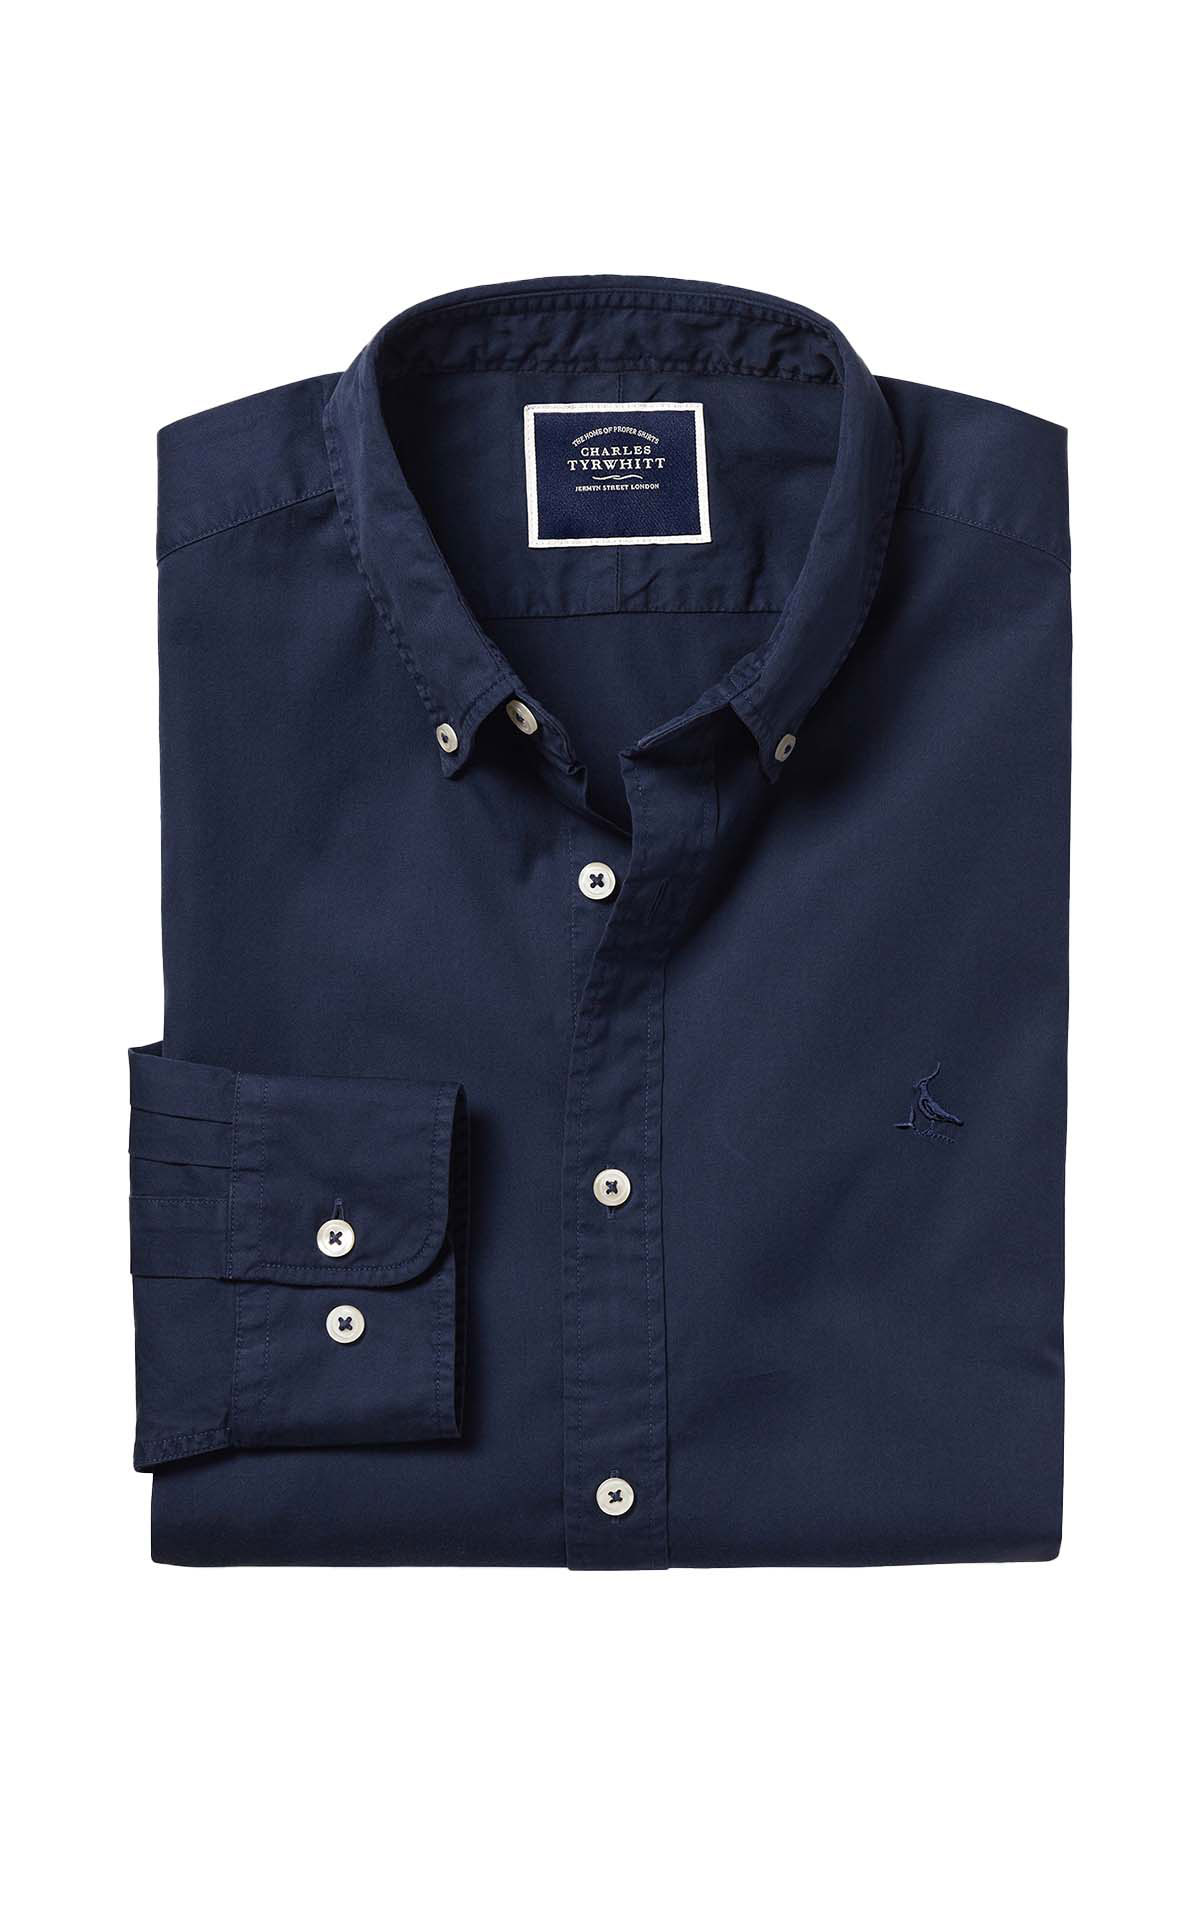 Charles Tyrwhitt Garment-dyed fine twill shirt navy from Bicester Village